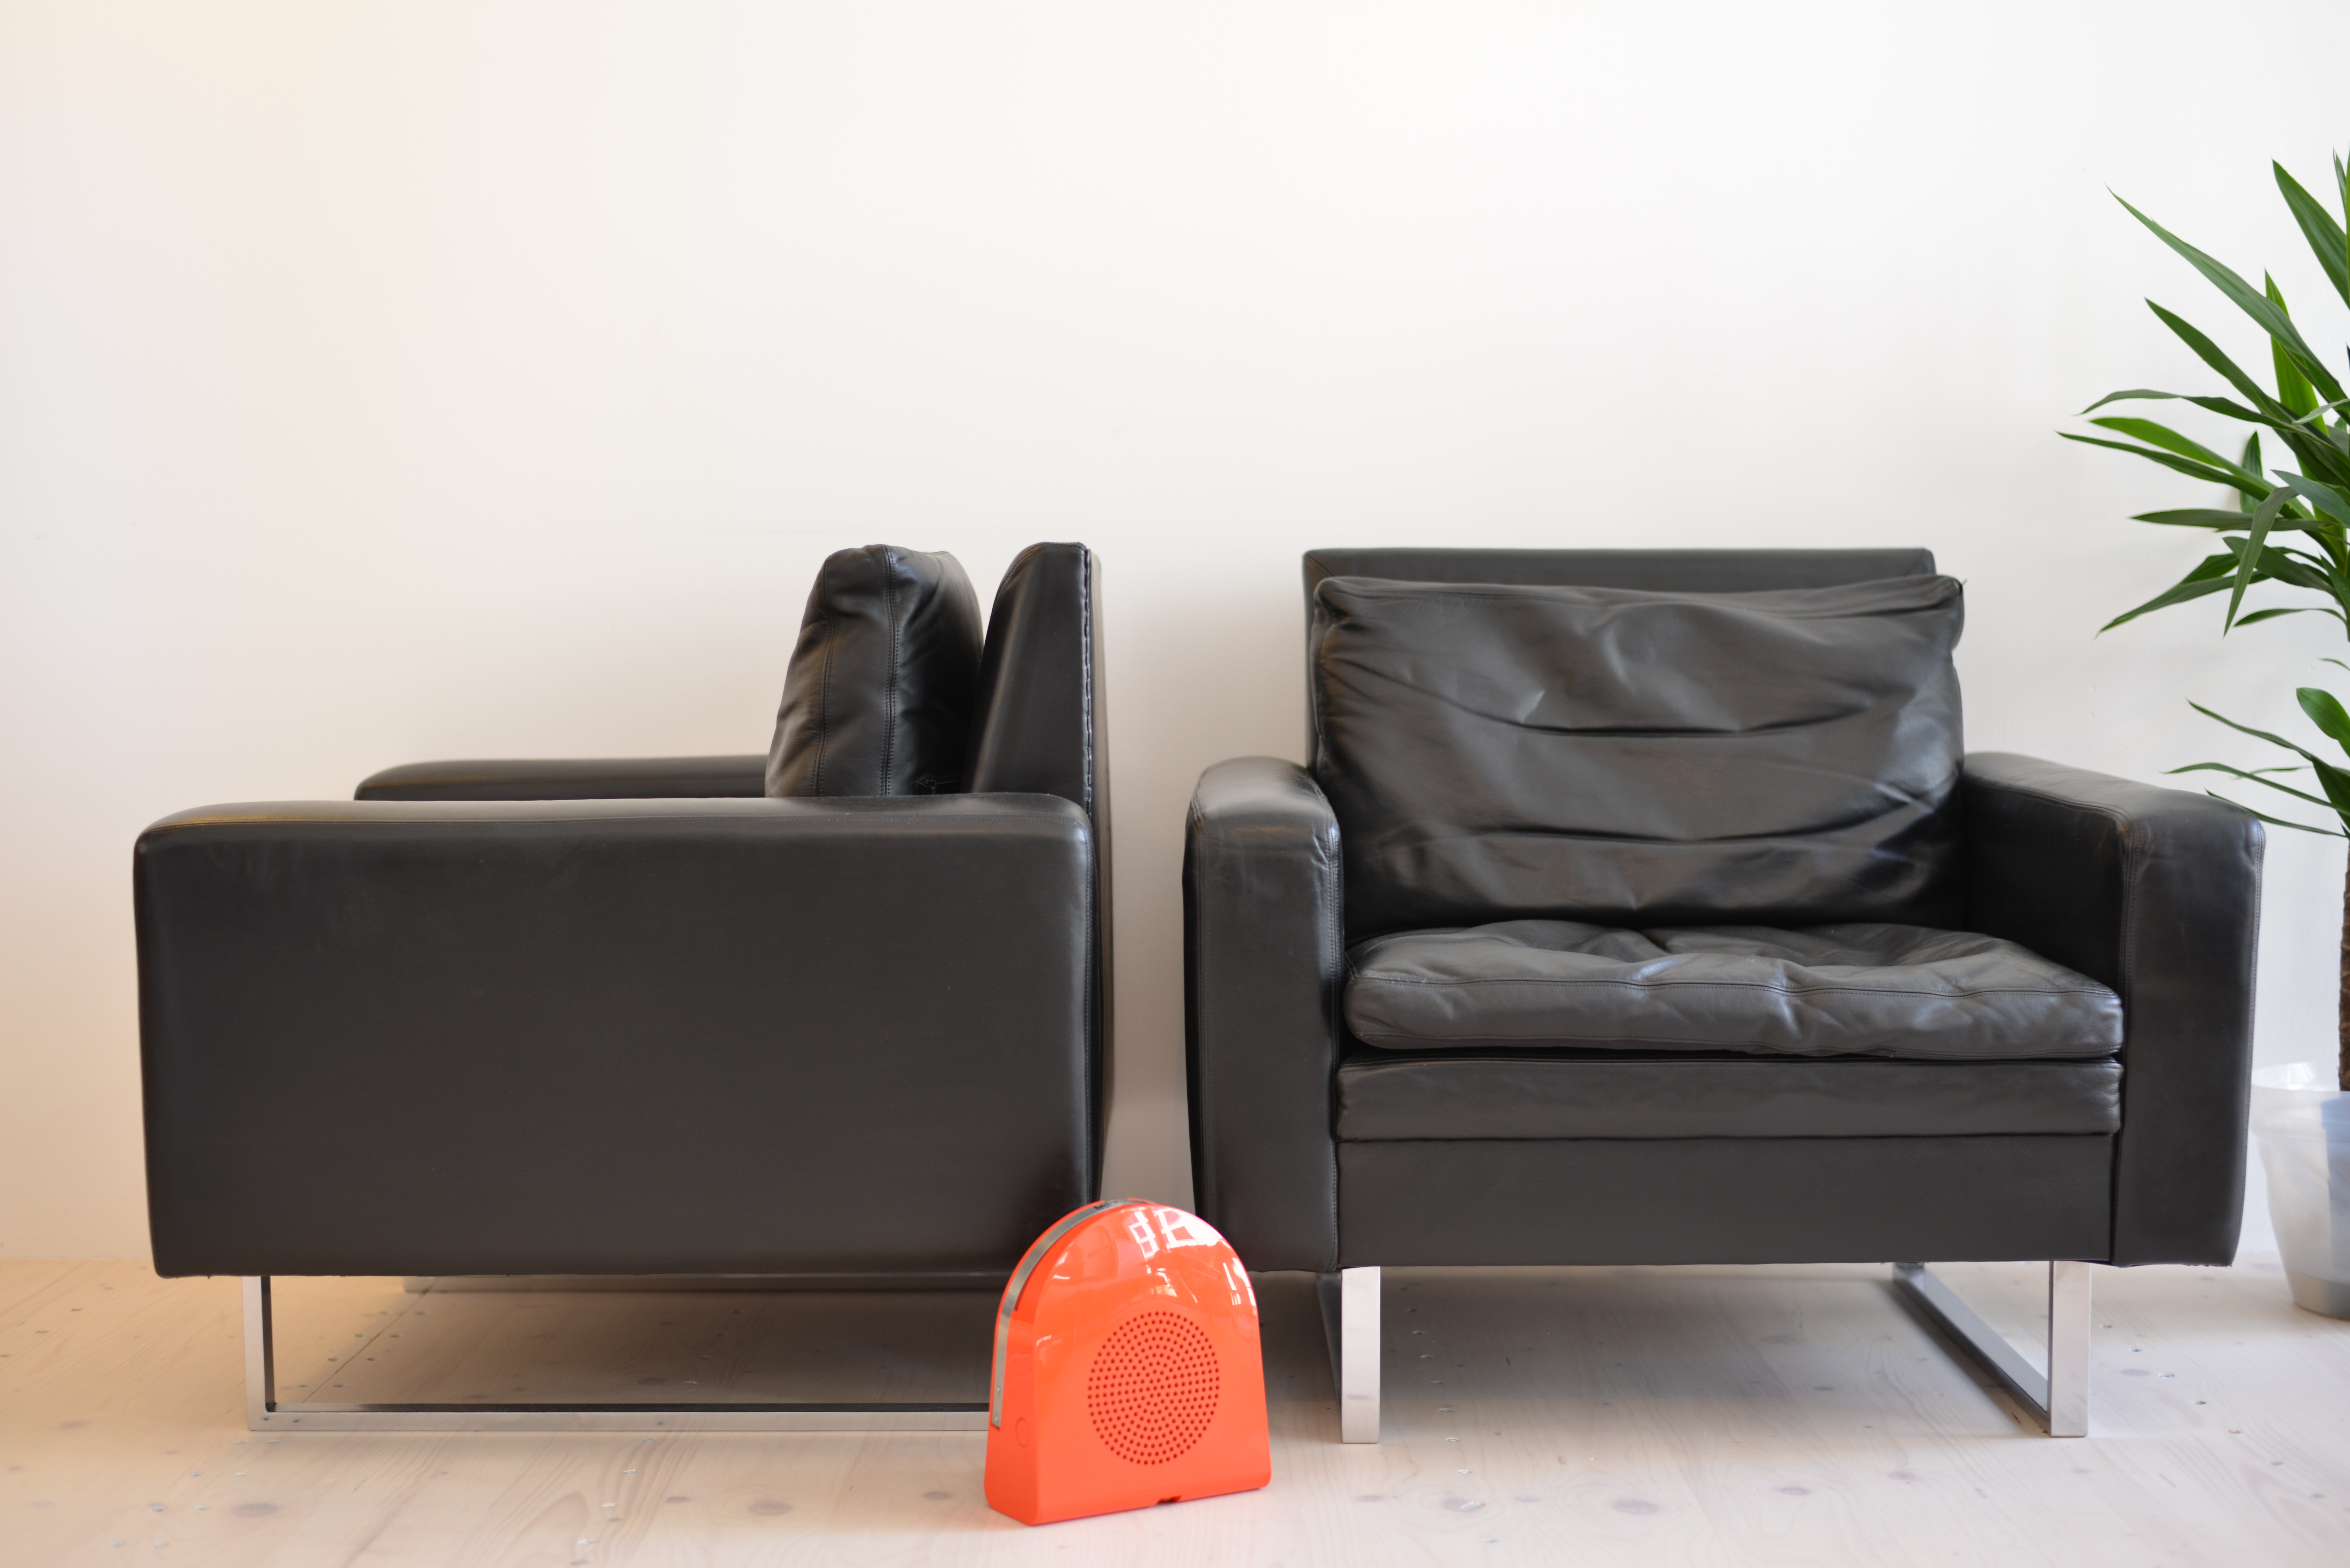 Pair of Black Skai Leather Chairs